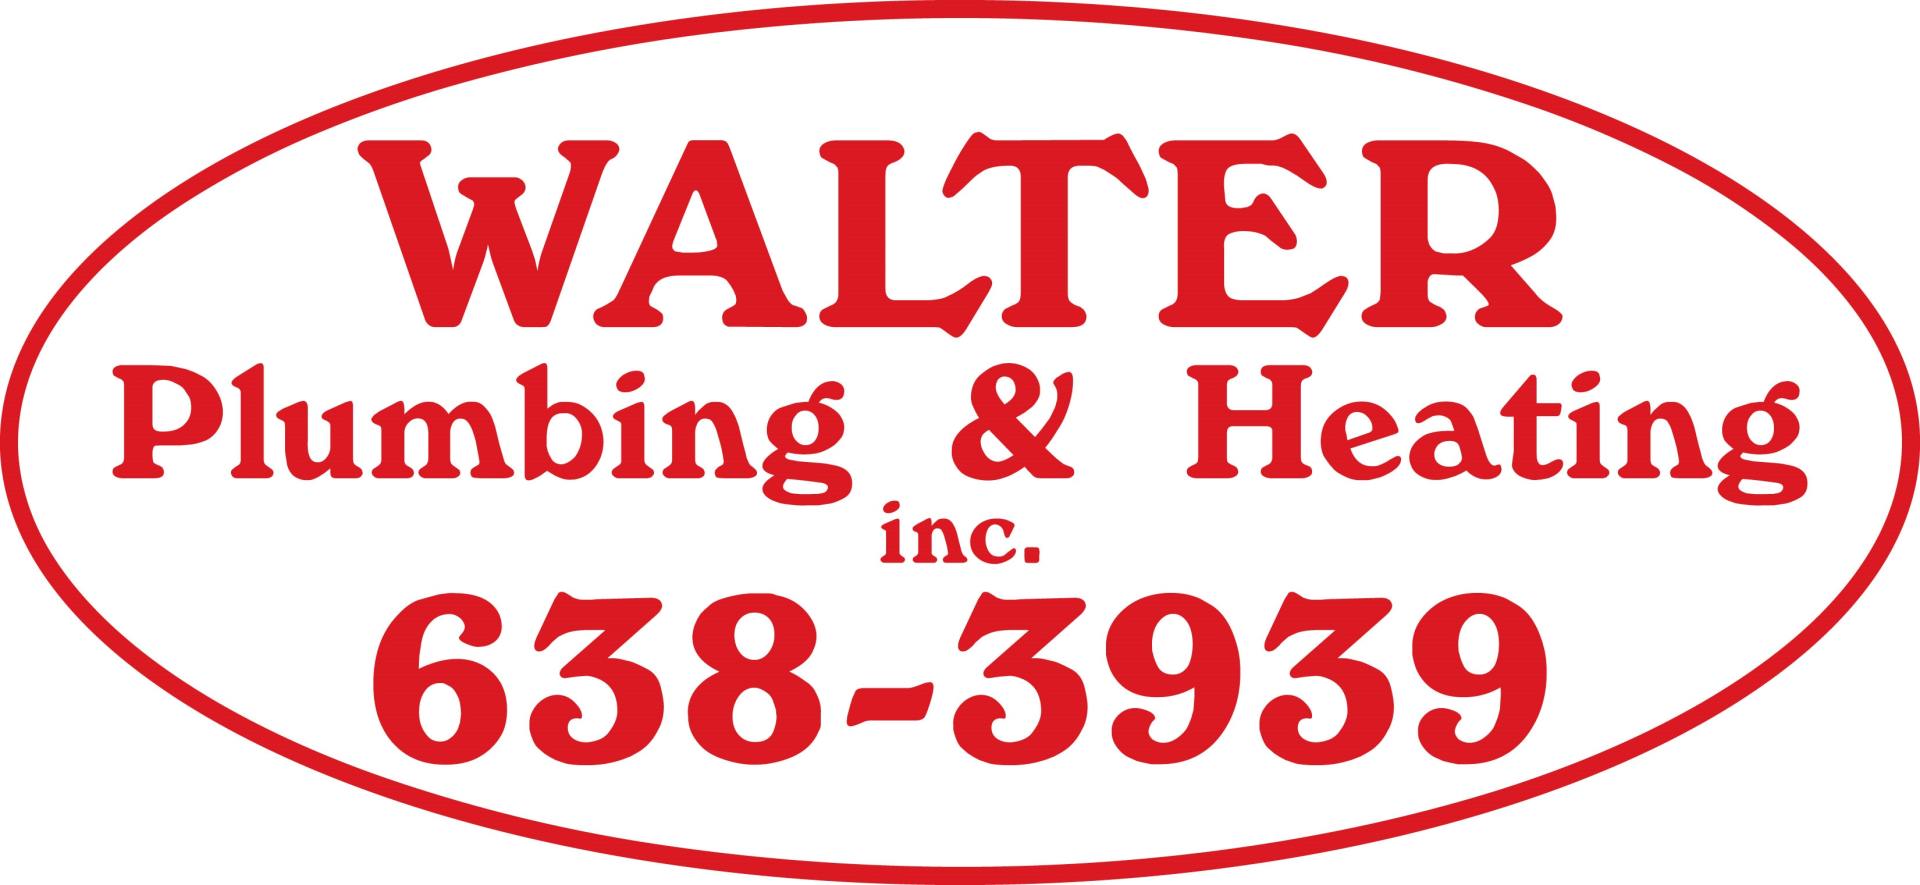 Walter Plumbing & Heating